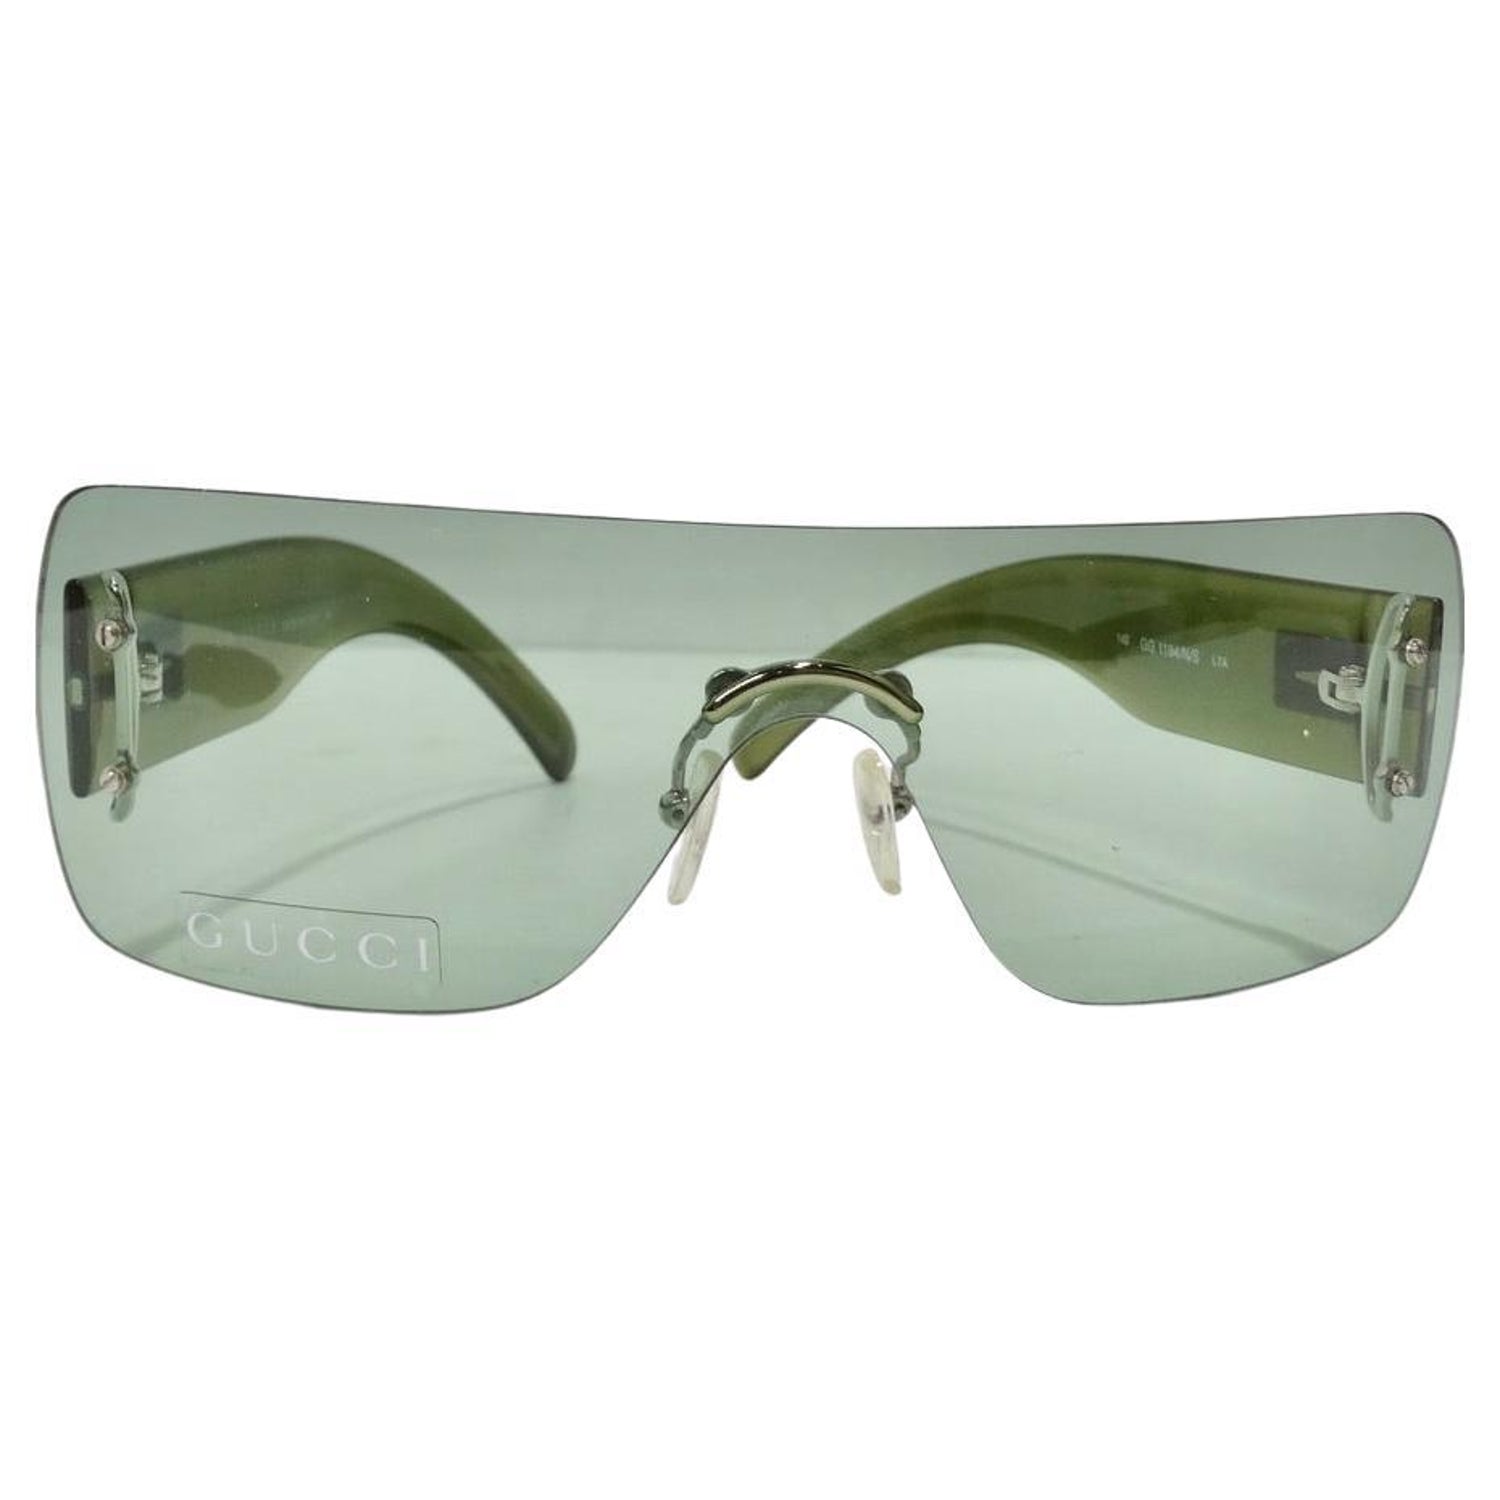 Chanel Shield Sunglasses - 6 For Sale on 1stDibs  2000s shield sunglasses,  chanel sheild glasses, channel shield sunglasses